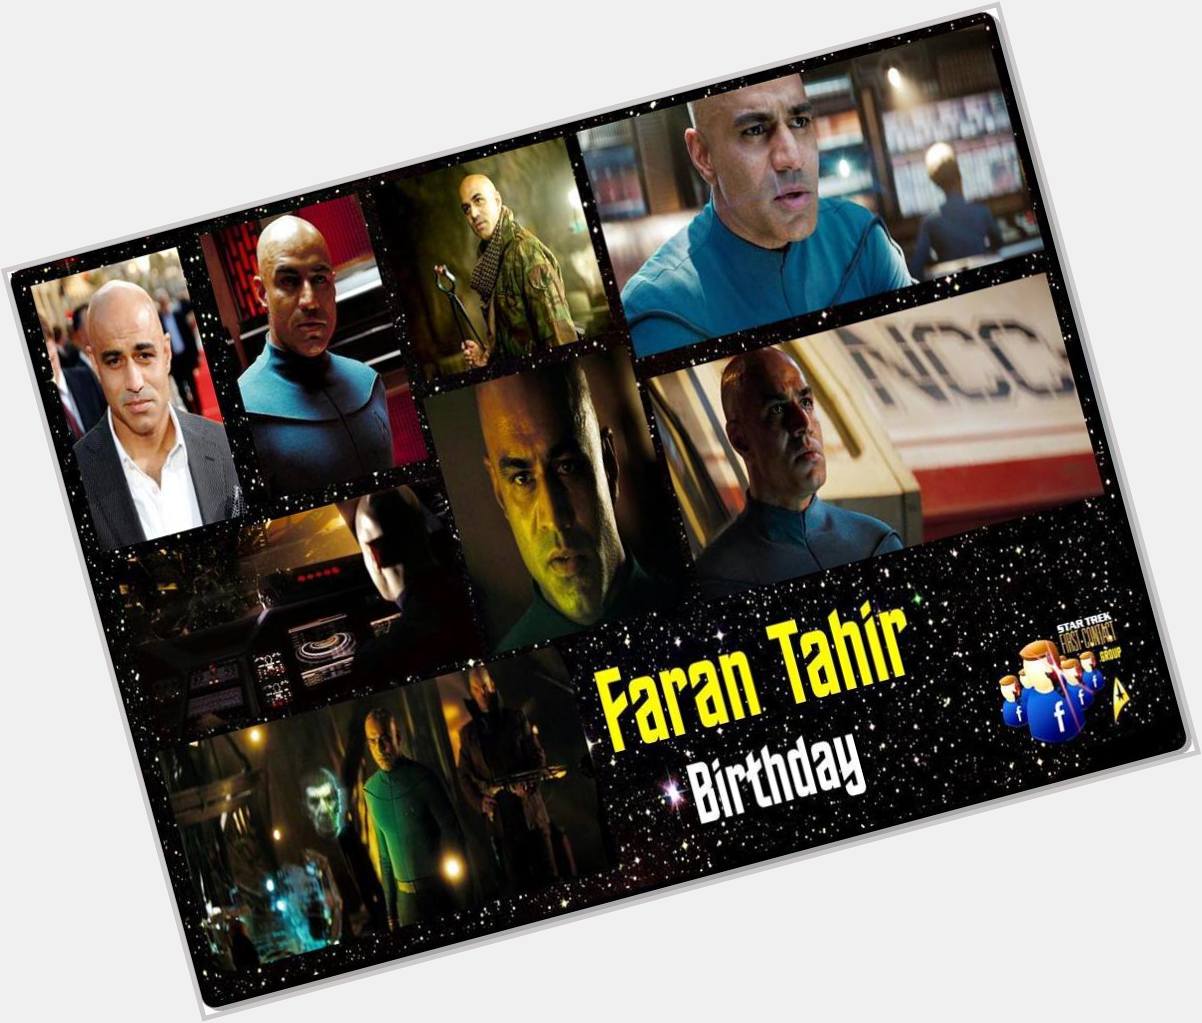 Happy birthday Faran Tahir, born February 16, 1963.  